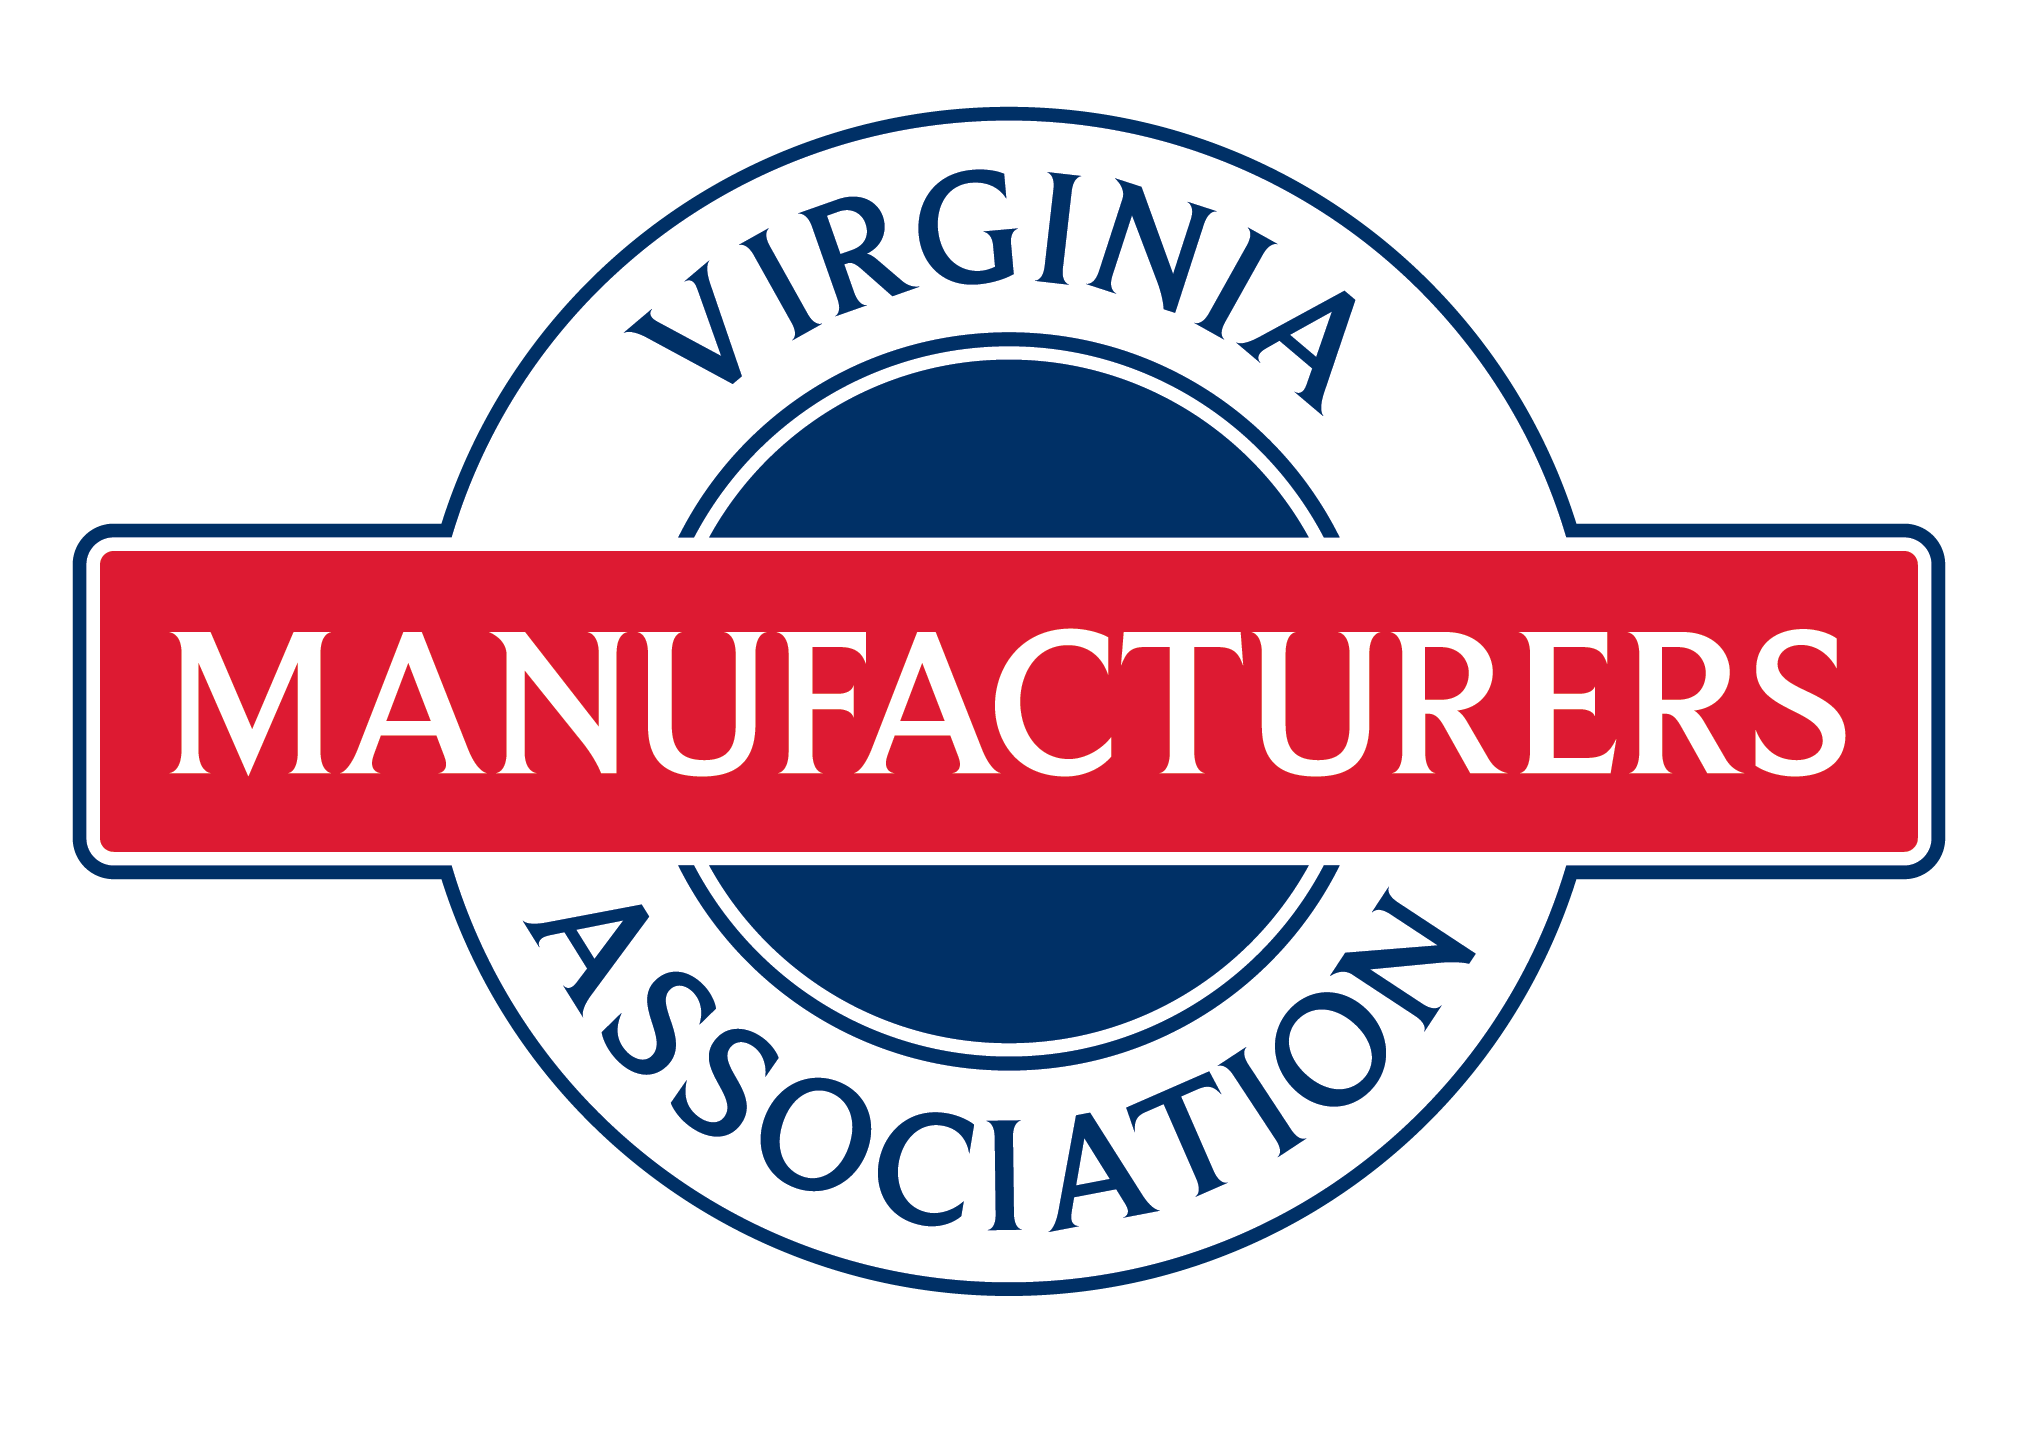 Virginia Manfacturers Association logo